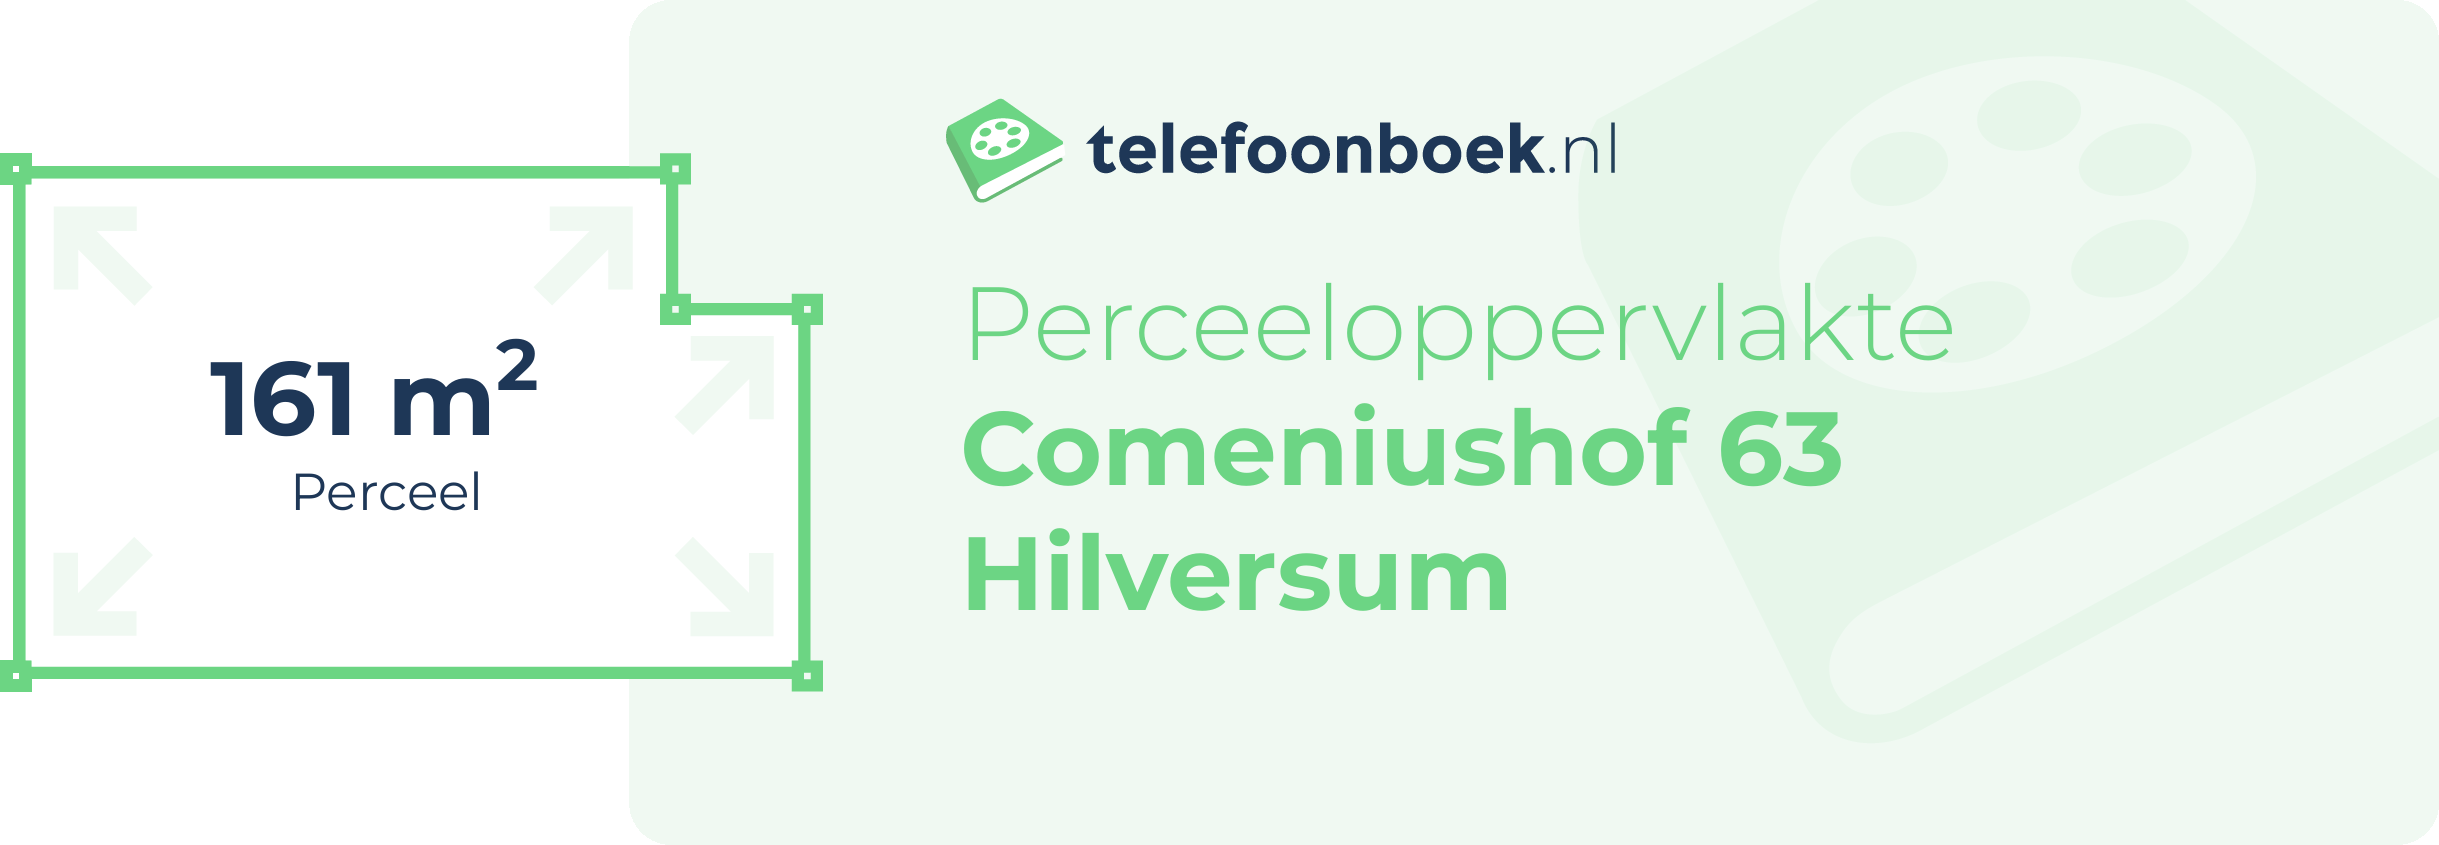 Perceeloppervlakte Comeniushof 63 Hilversum